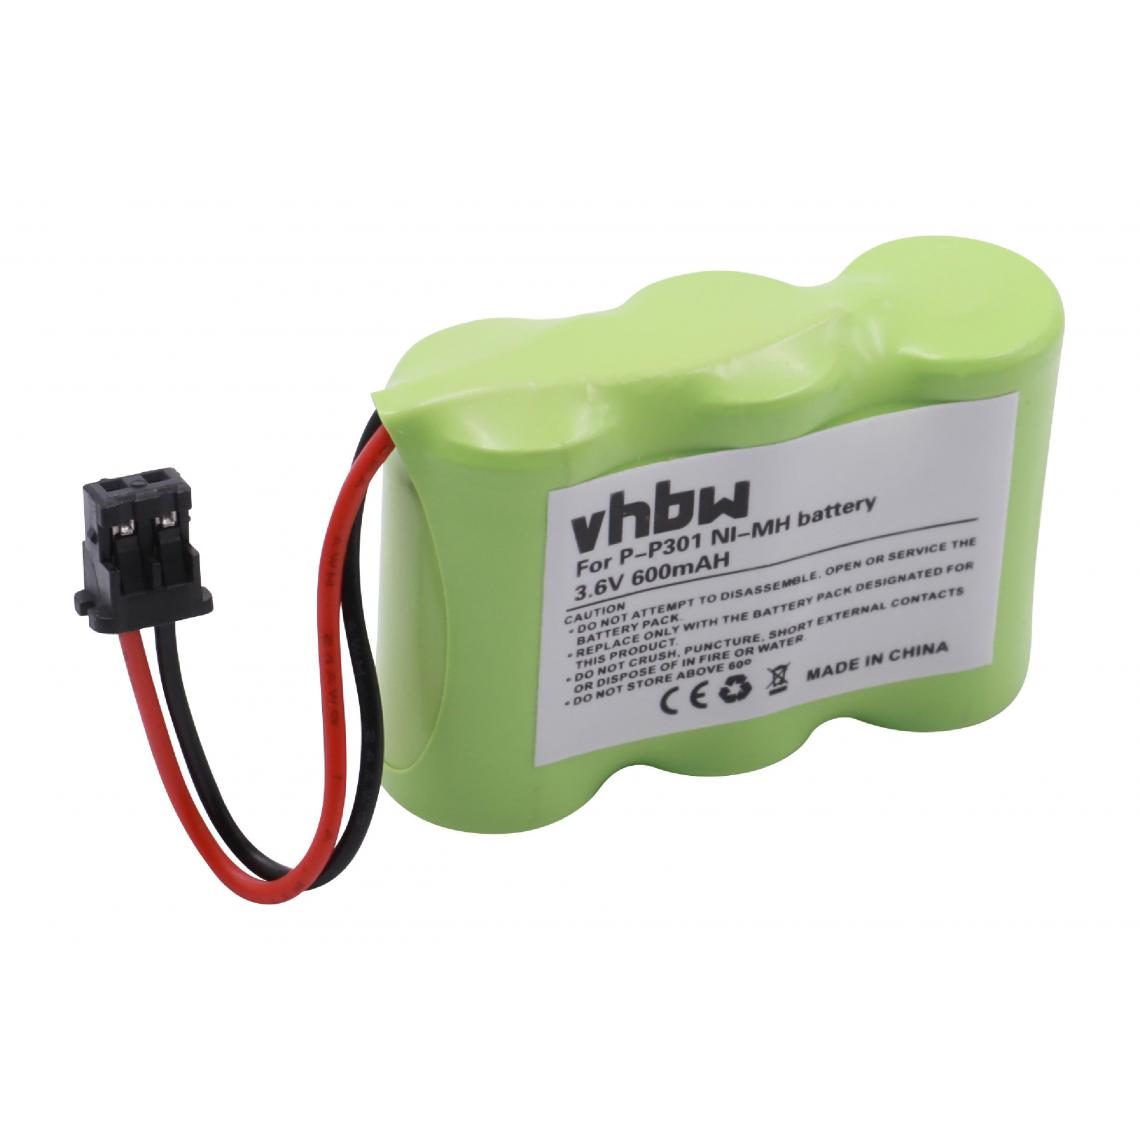 Vhbw - vhbw Batterie compatible avec Sony SPP73, SPP-75, SPPA110, SPPA20, SPP-A20, SPPA250 téléphone fixe sans fil (600mAh, 3,6V, NiMH) - Batterie téléphone